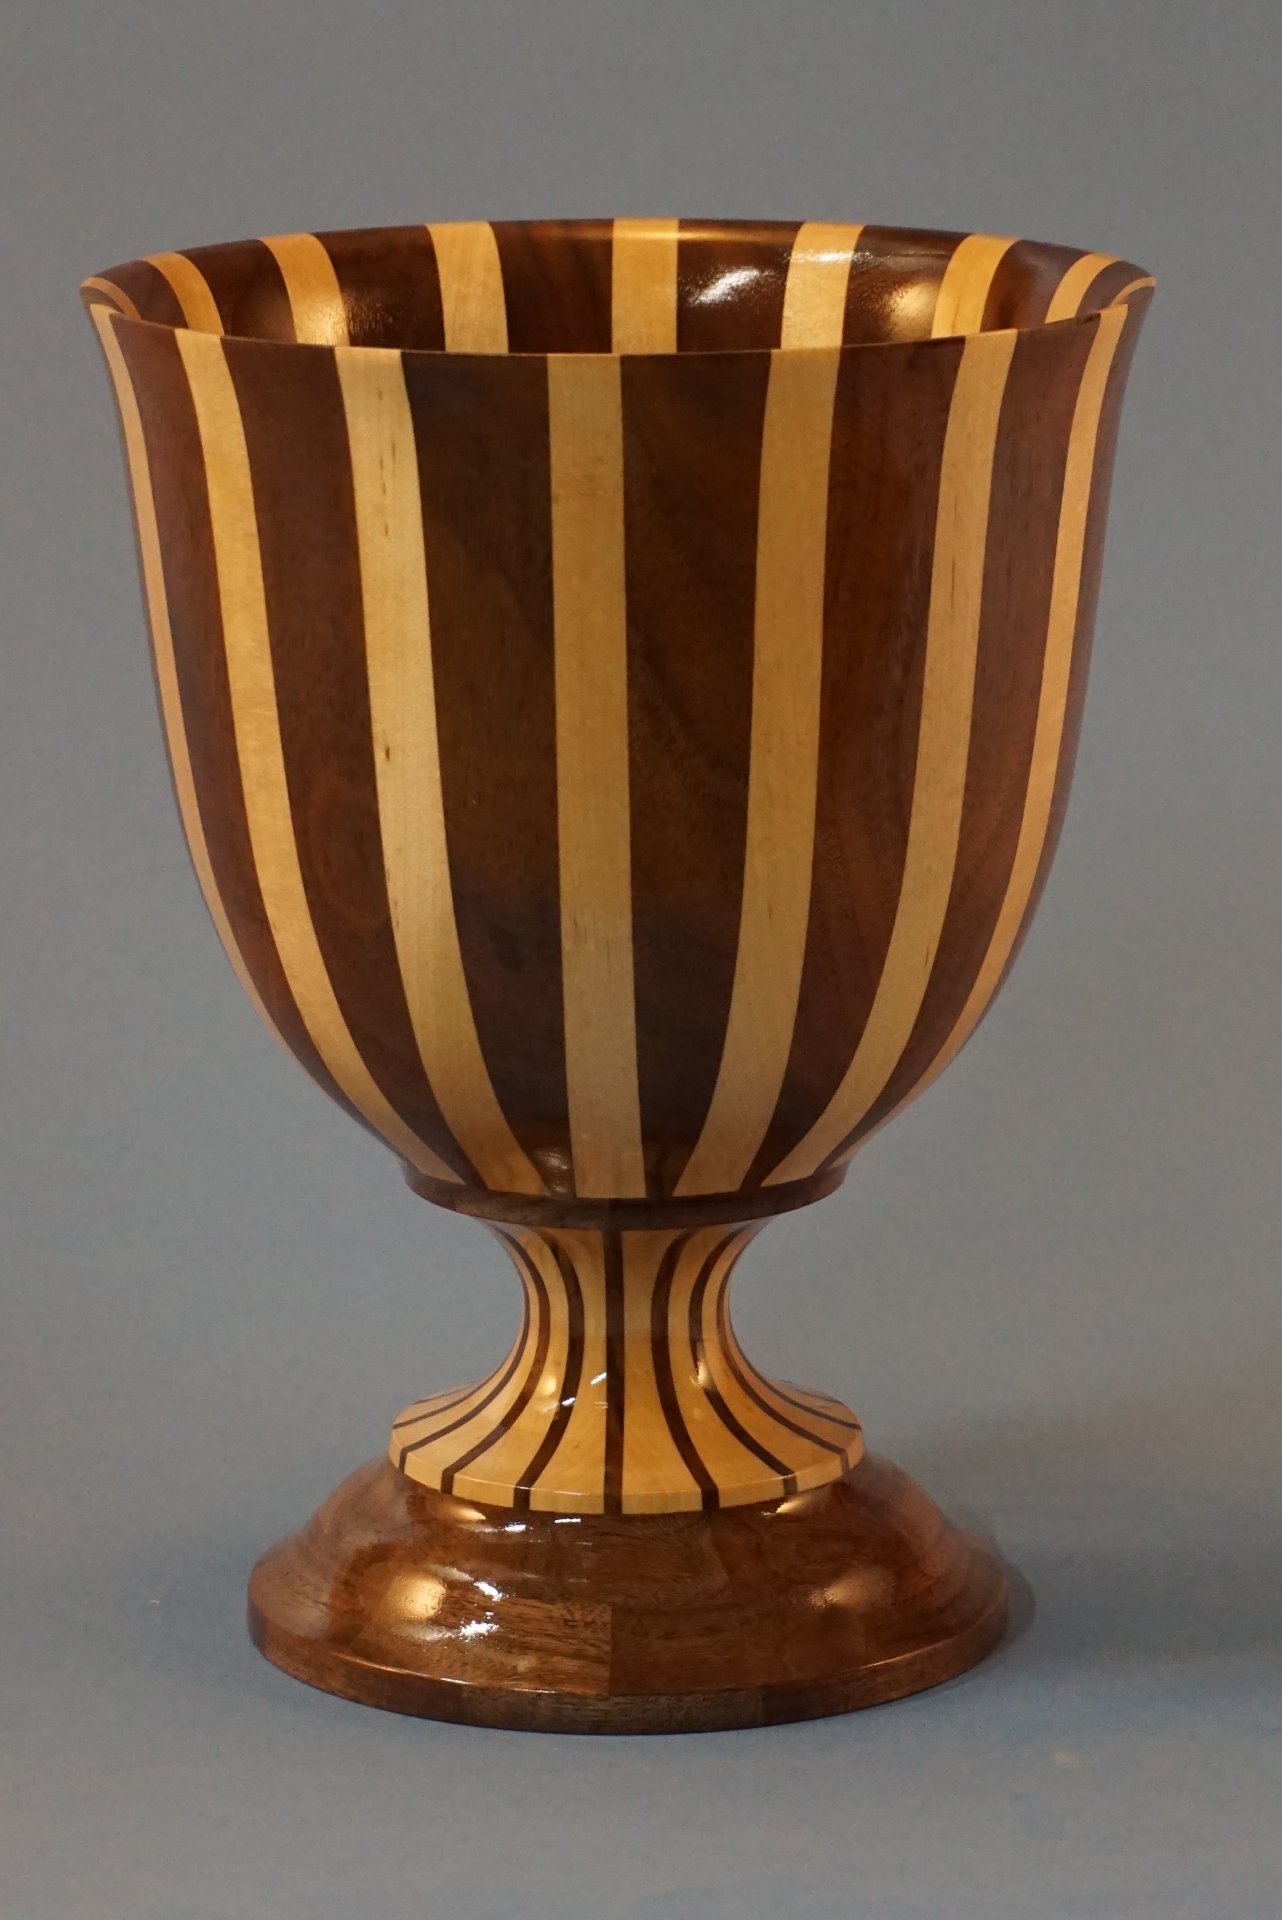 Walnut Birch Award Cup form